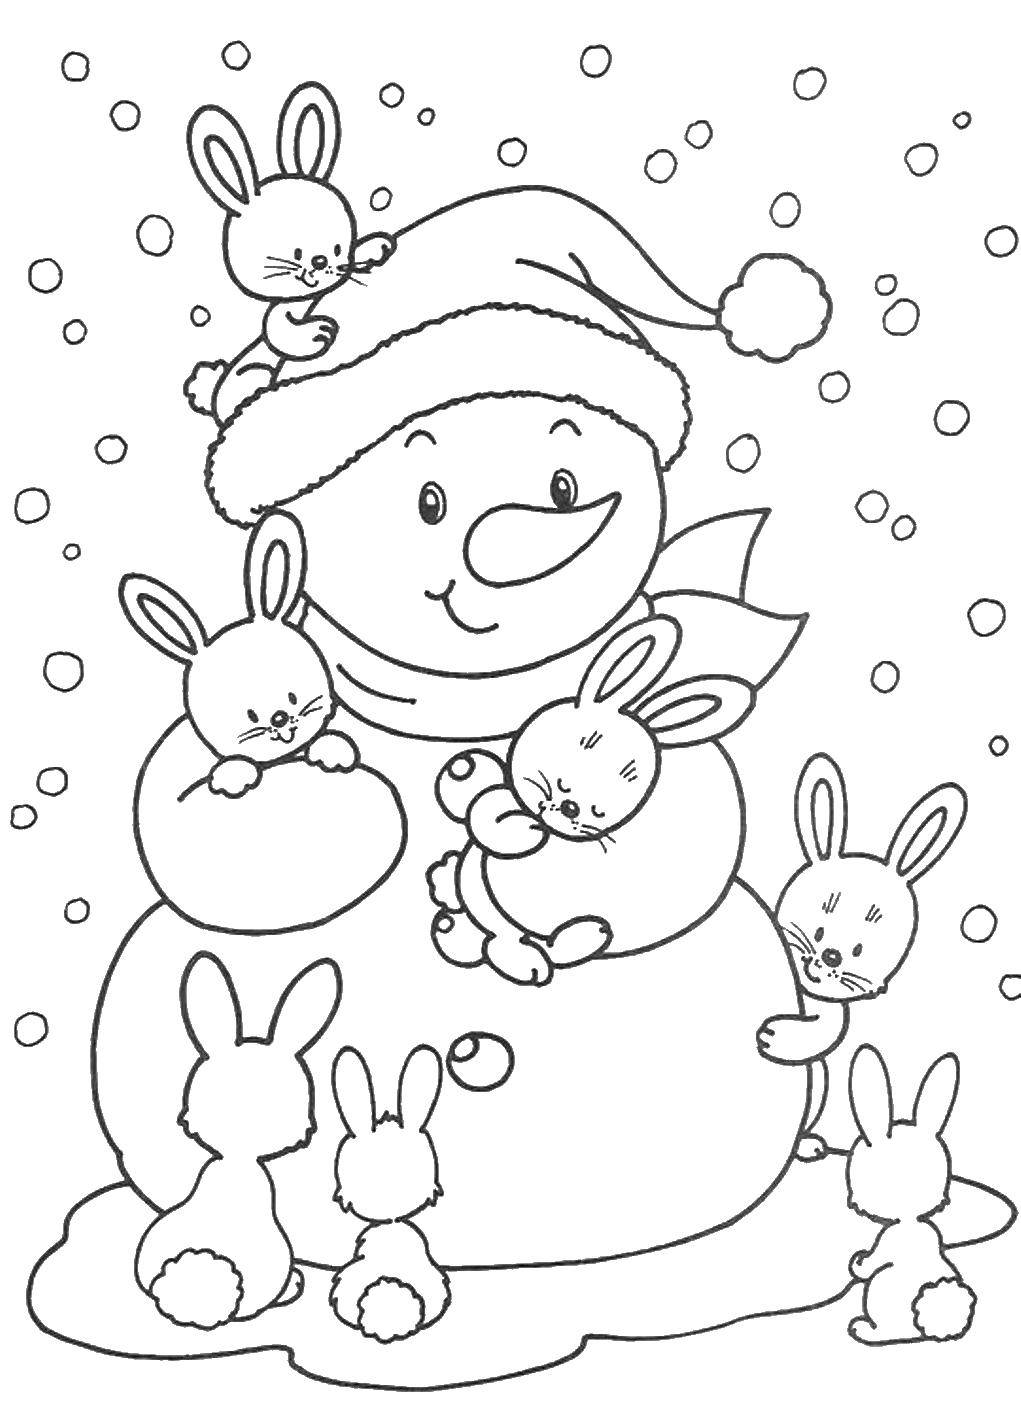 Название: Раскраска Заичики и снеговик. Категория: зима. Теги: снеговик, зайчики.